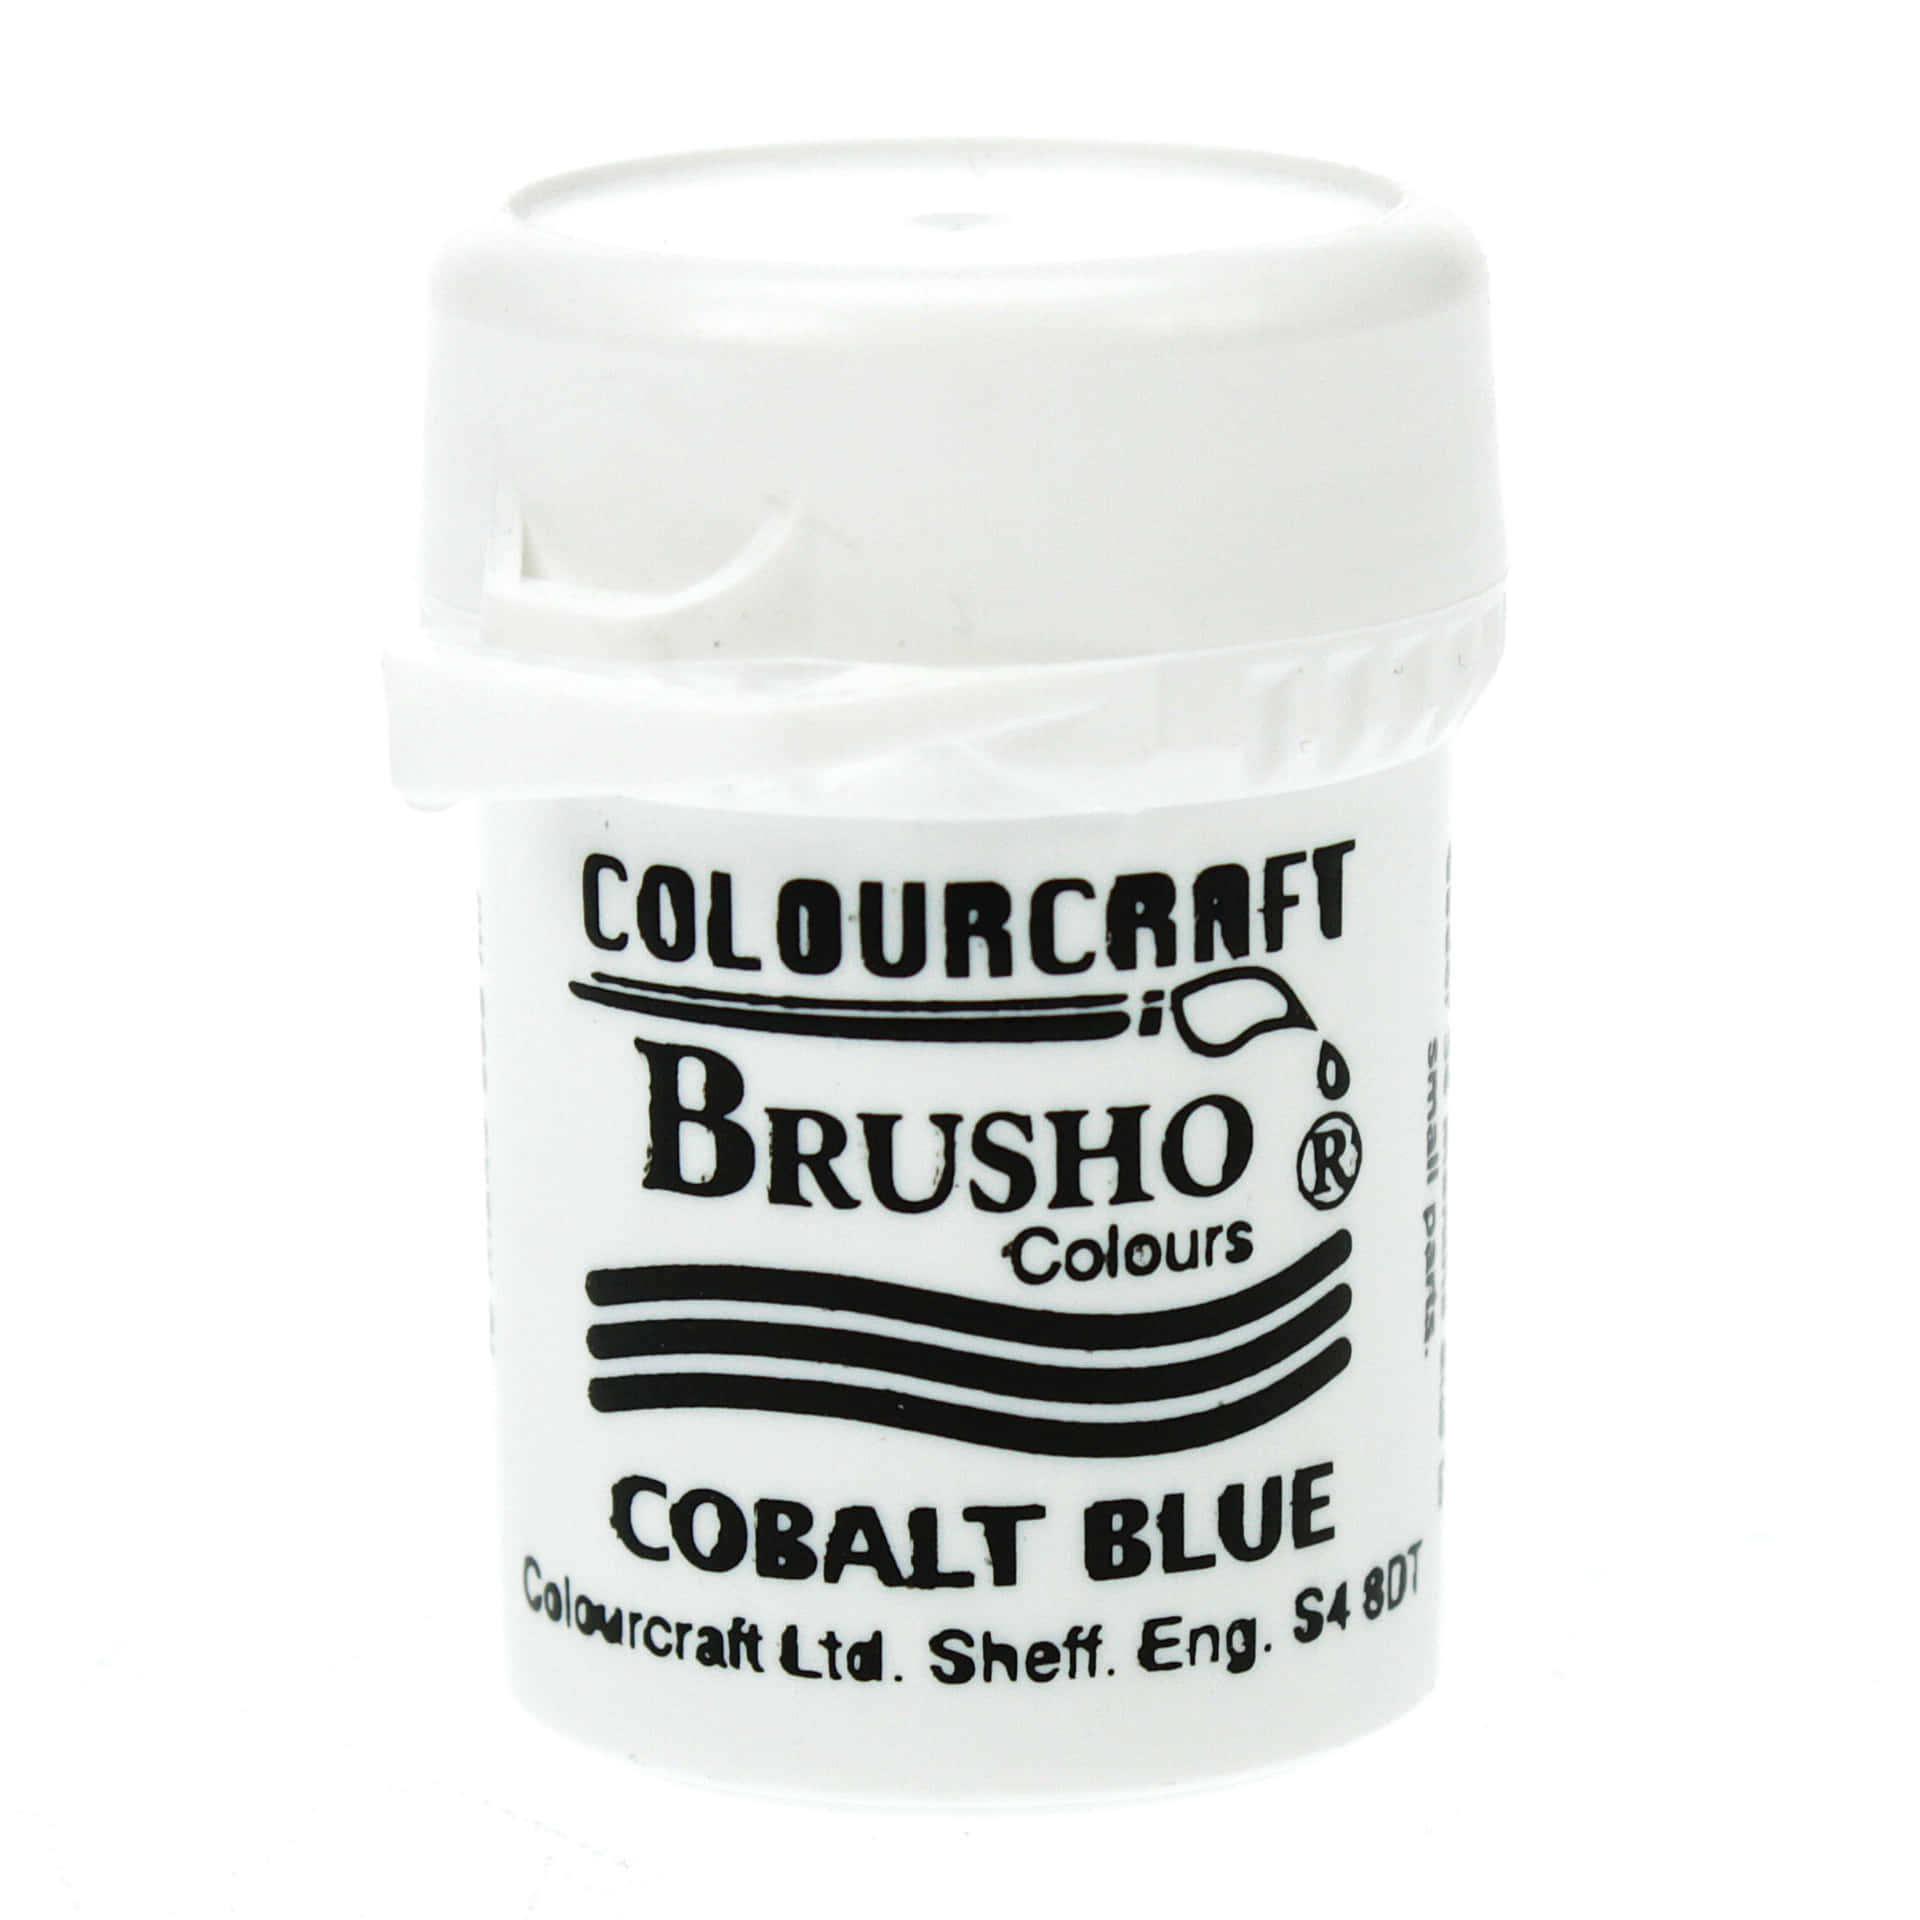 Making a bold statement with Cobalt Blue Wallpaper